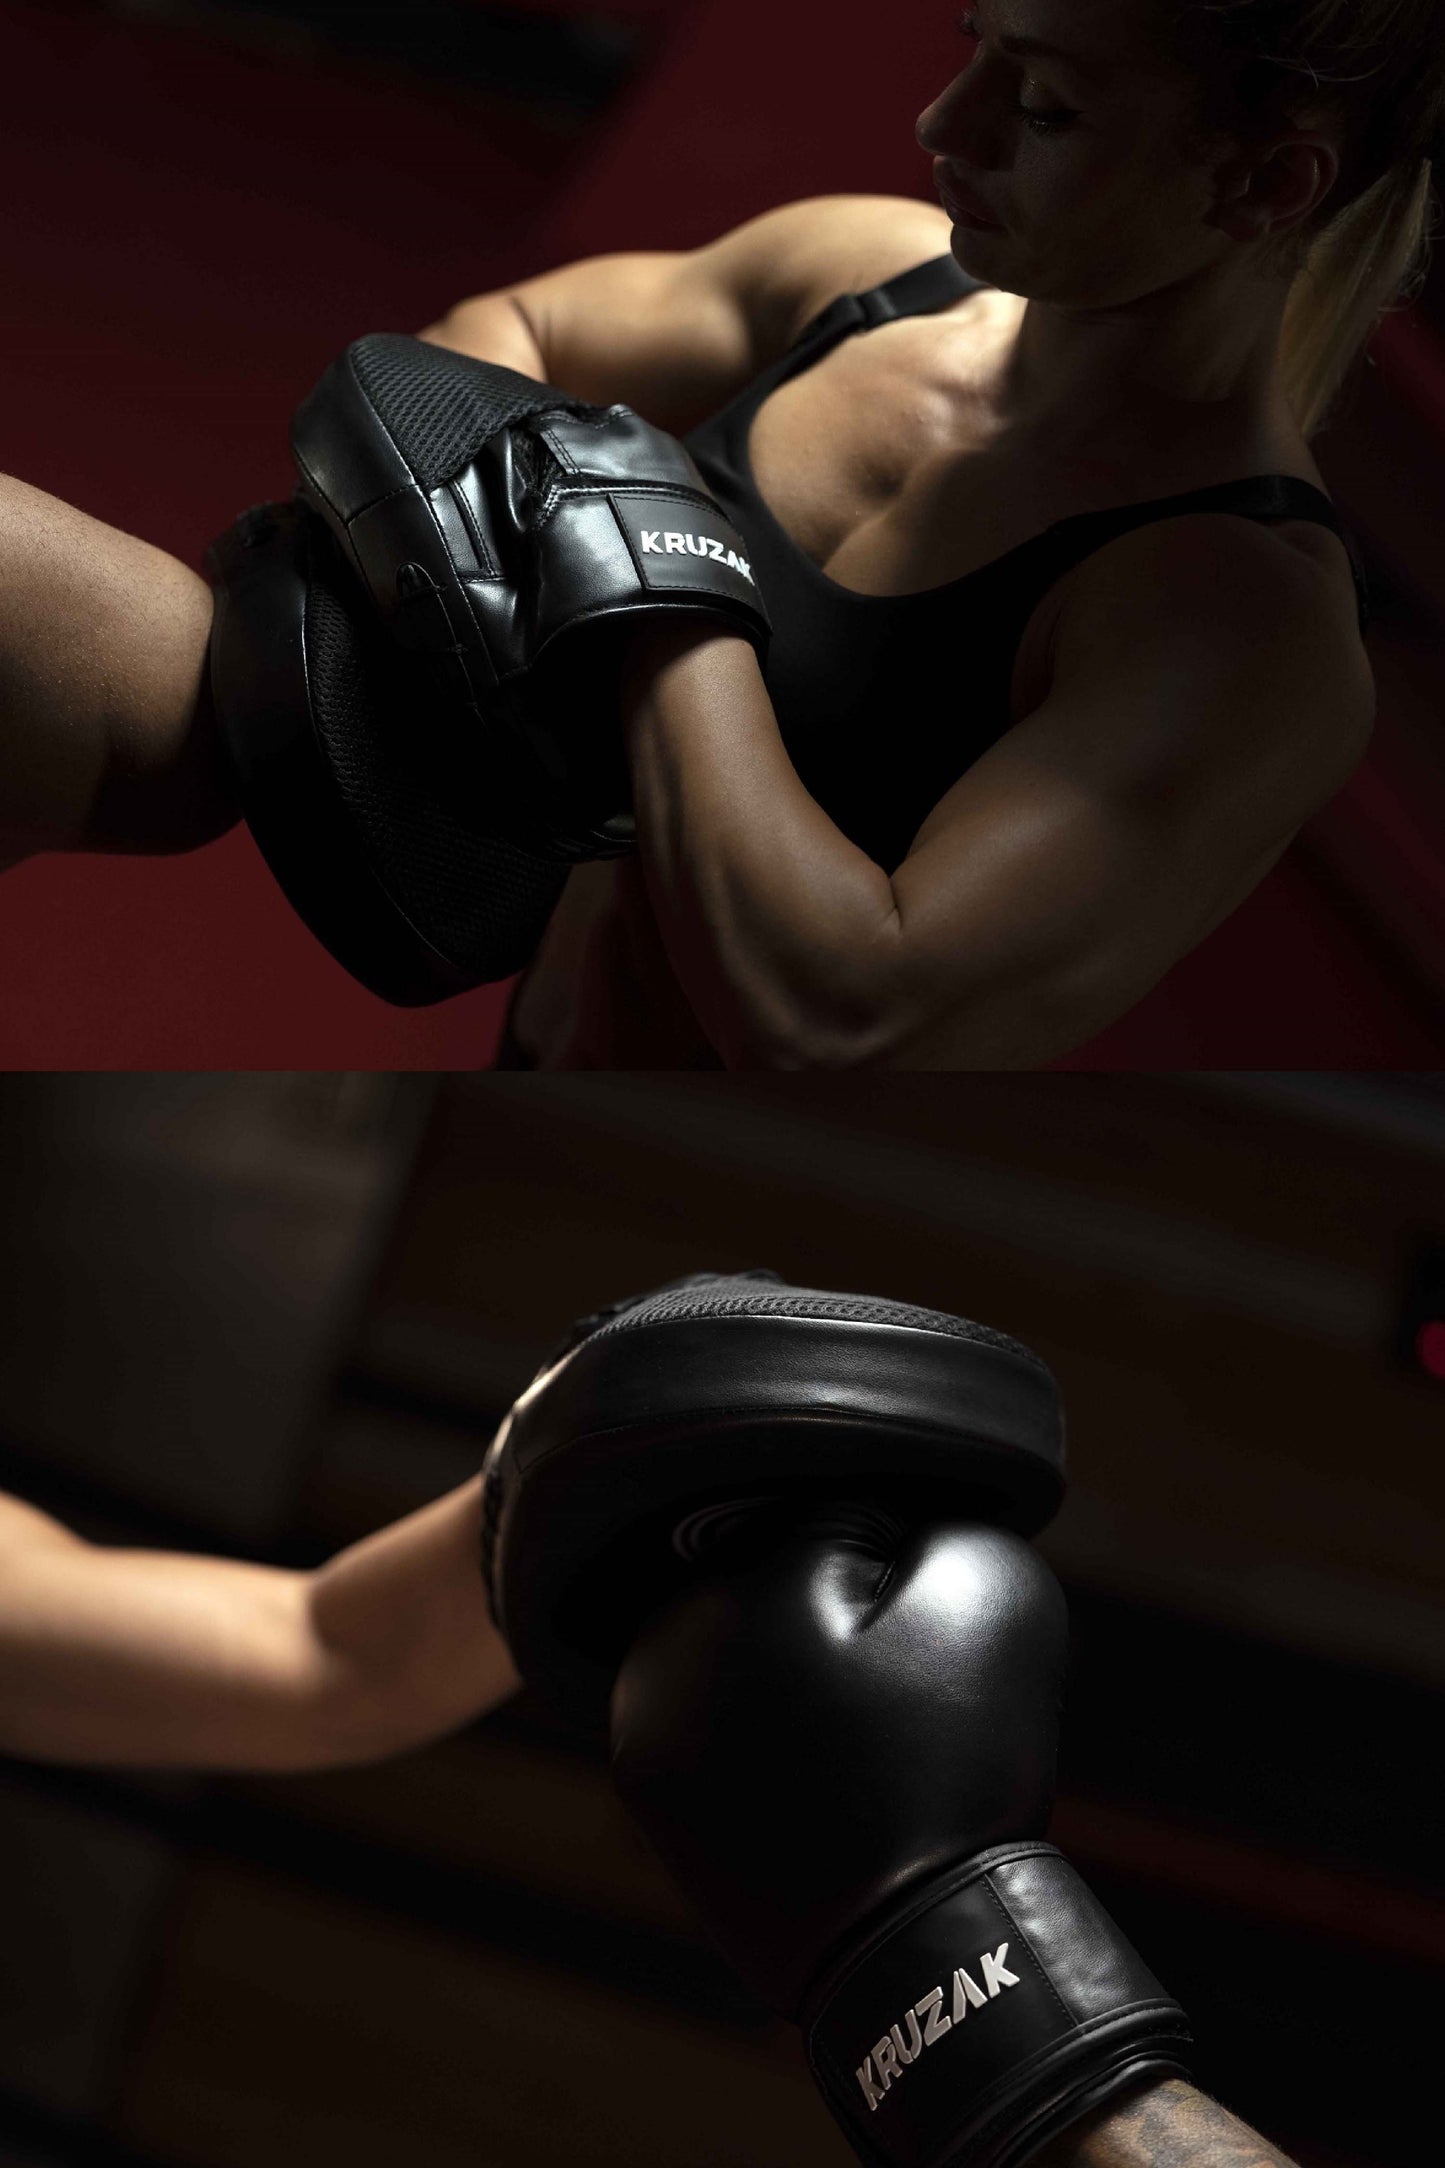 Product demonstration of Kruzak Unisex Black Boxing Gloves